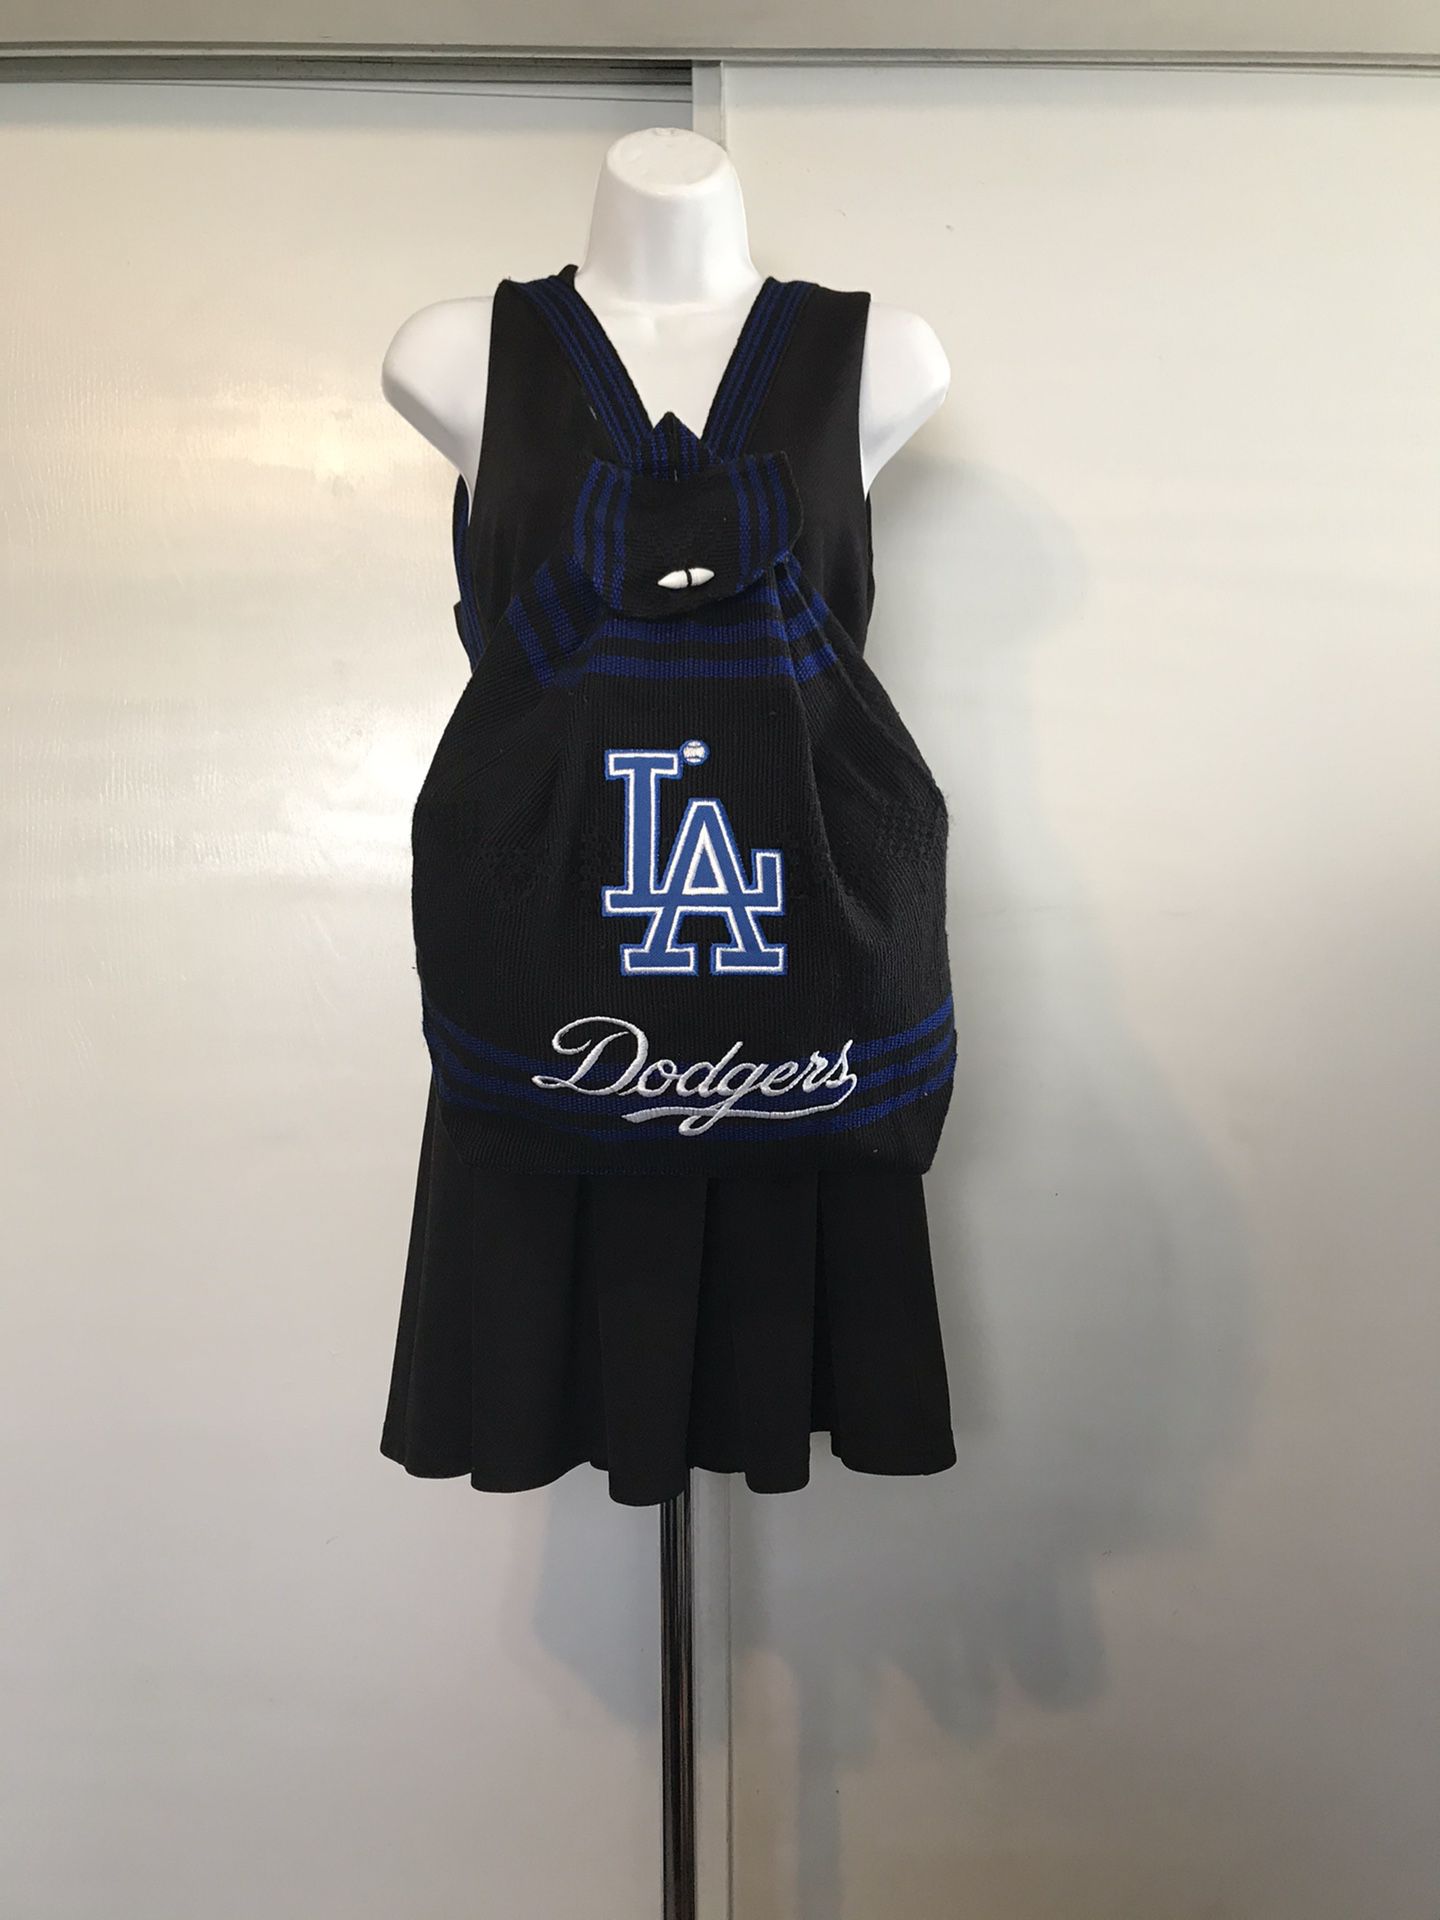 Los Angeles Dodgers Backpack